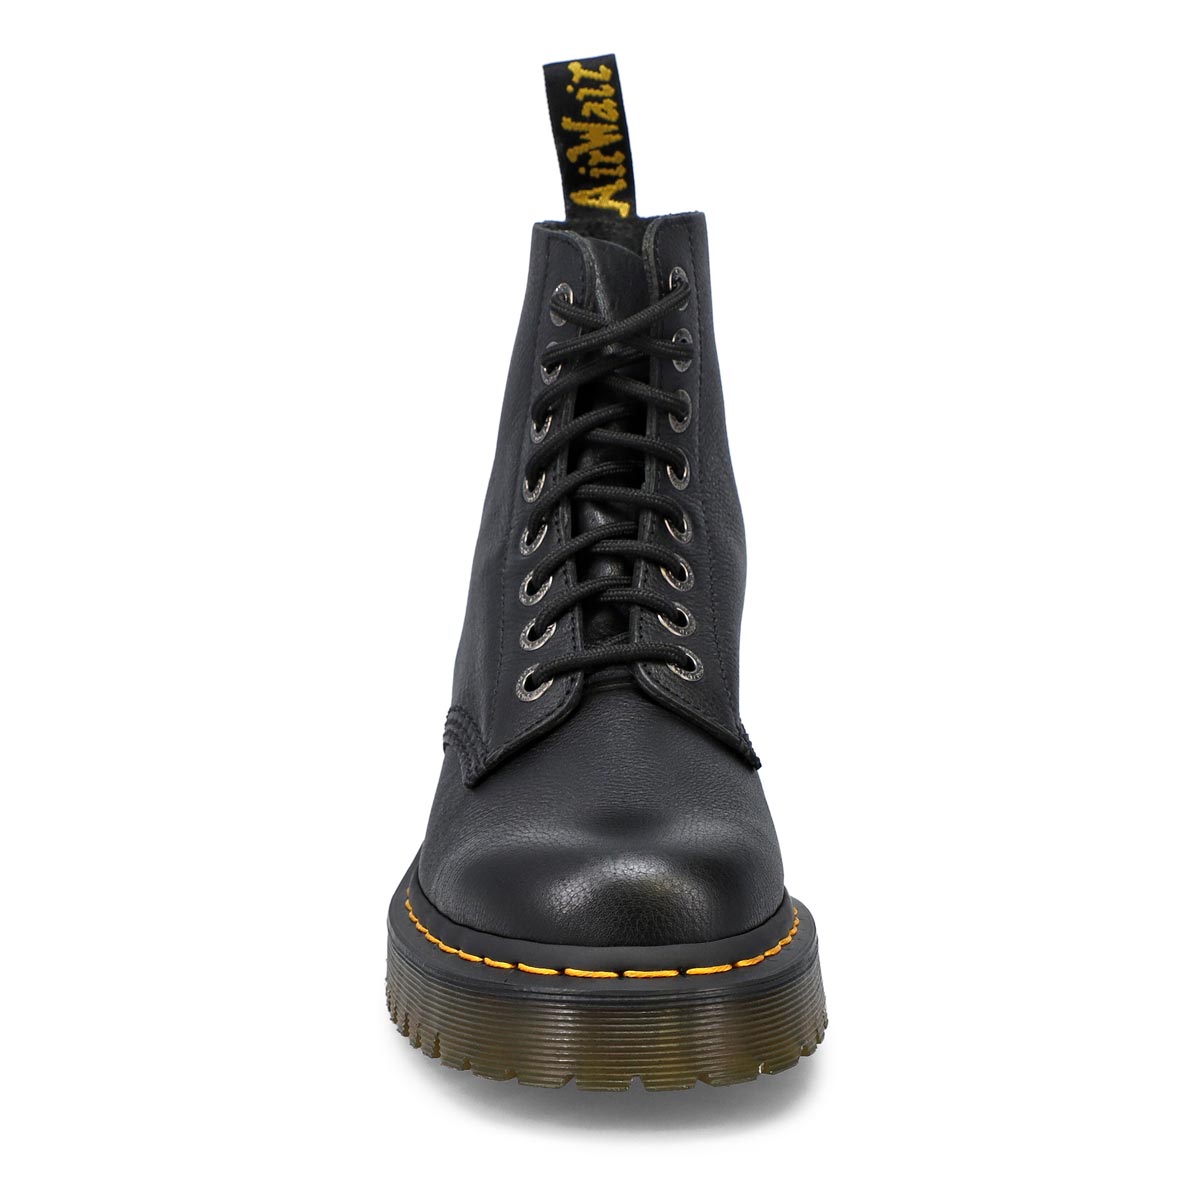 Women's 1460 Pascal Bex Boots - Black